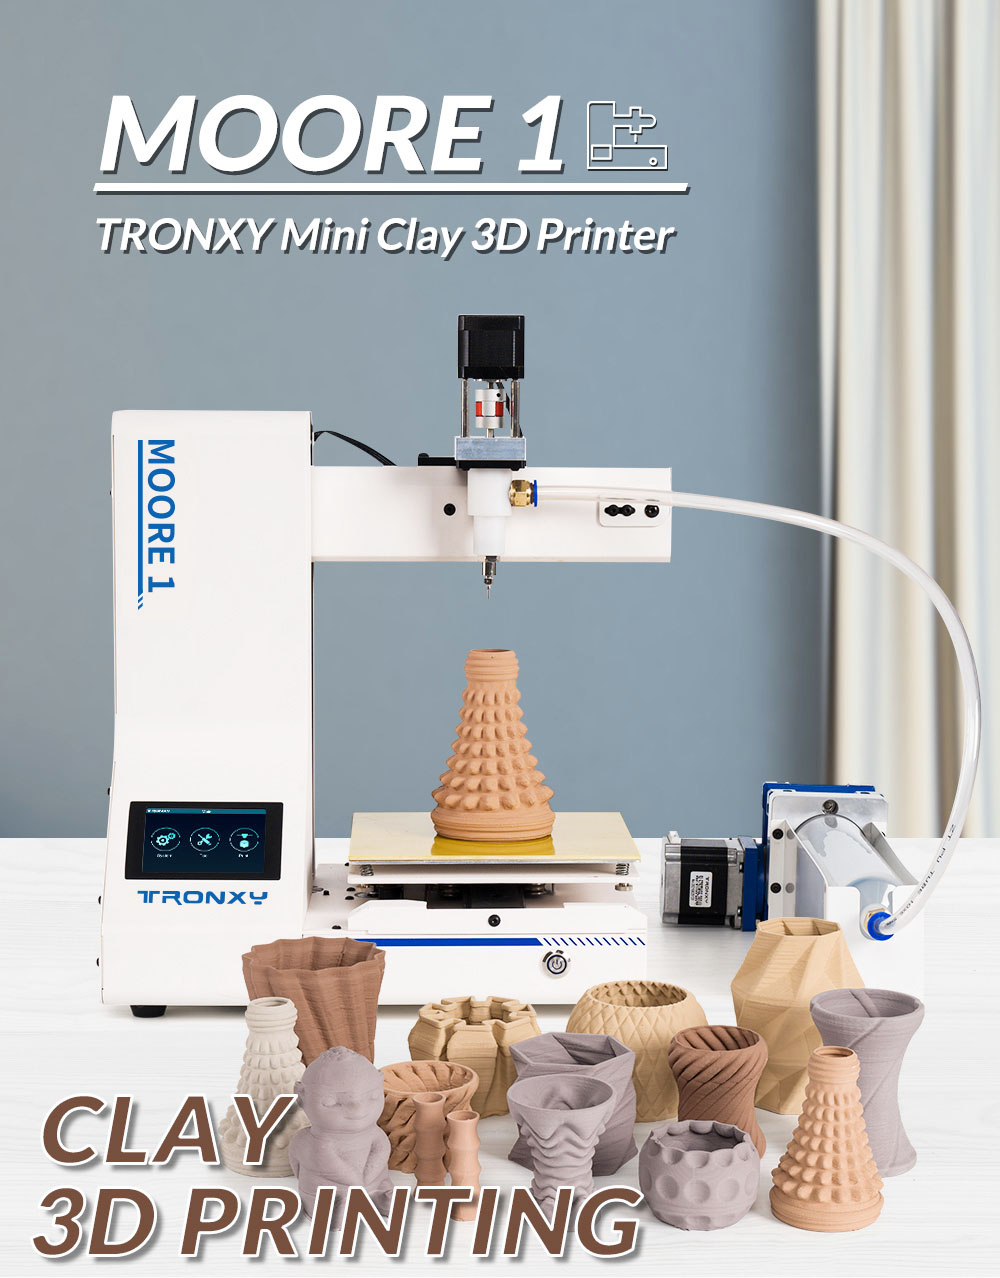 Tronxy Moore 1 Mini Clay 3D Printer, скорость печати 40 мм/с, возобновление печати, TMC2209, 180*180*180 мм